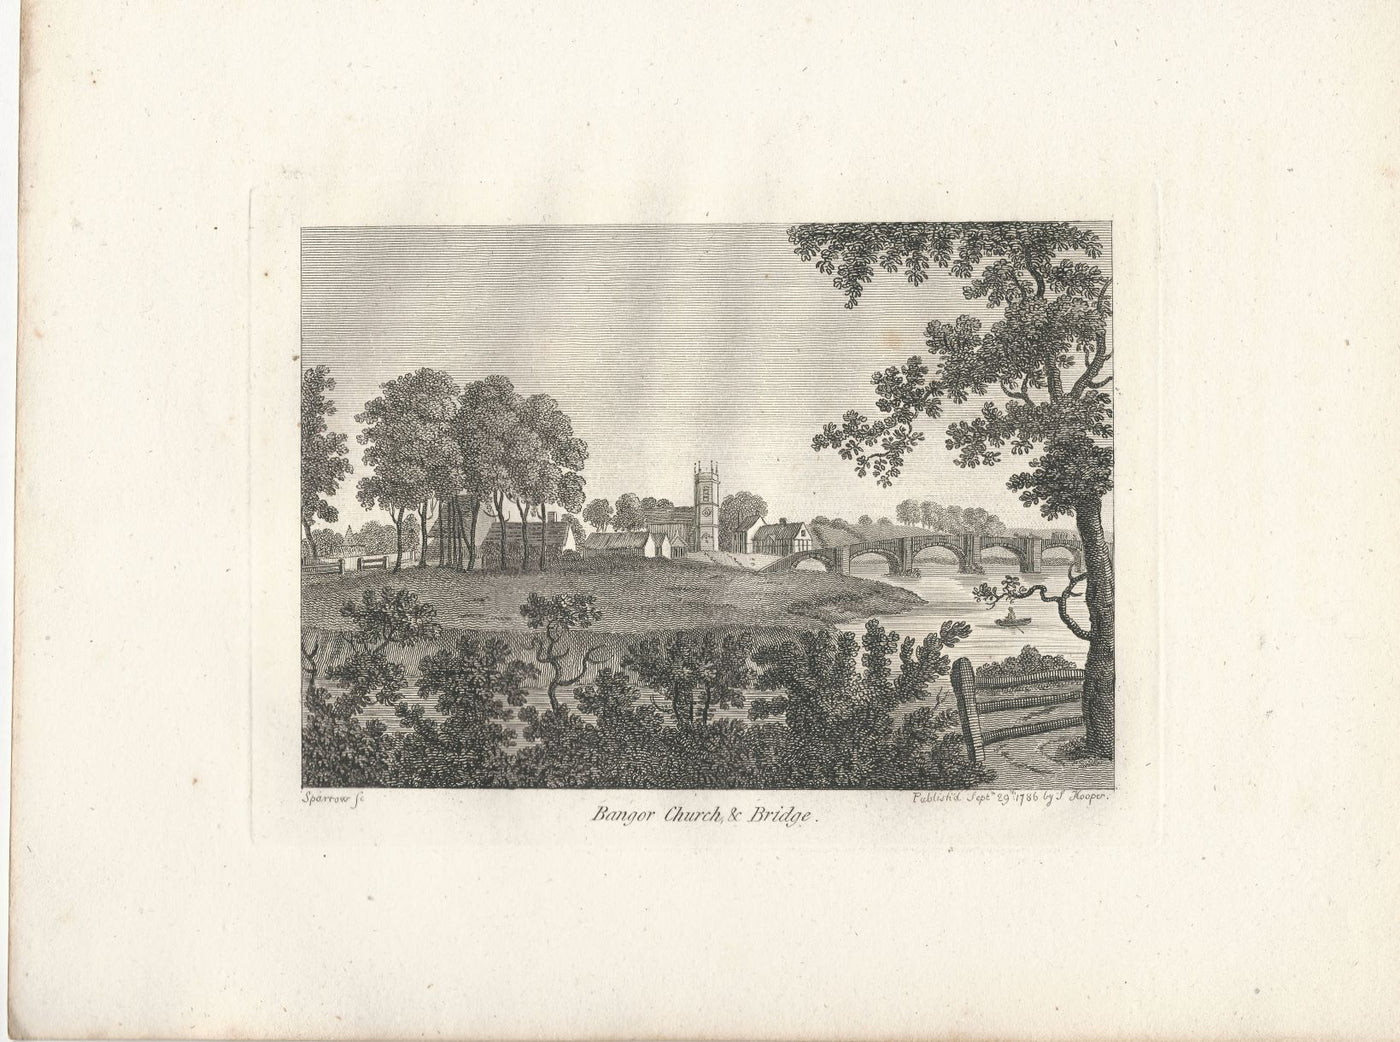 Bangor Church and Bangor Bridge antique print dated 1786